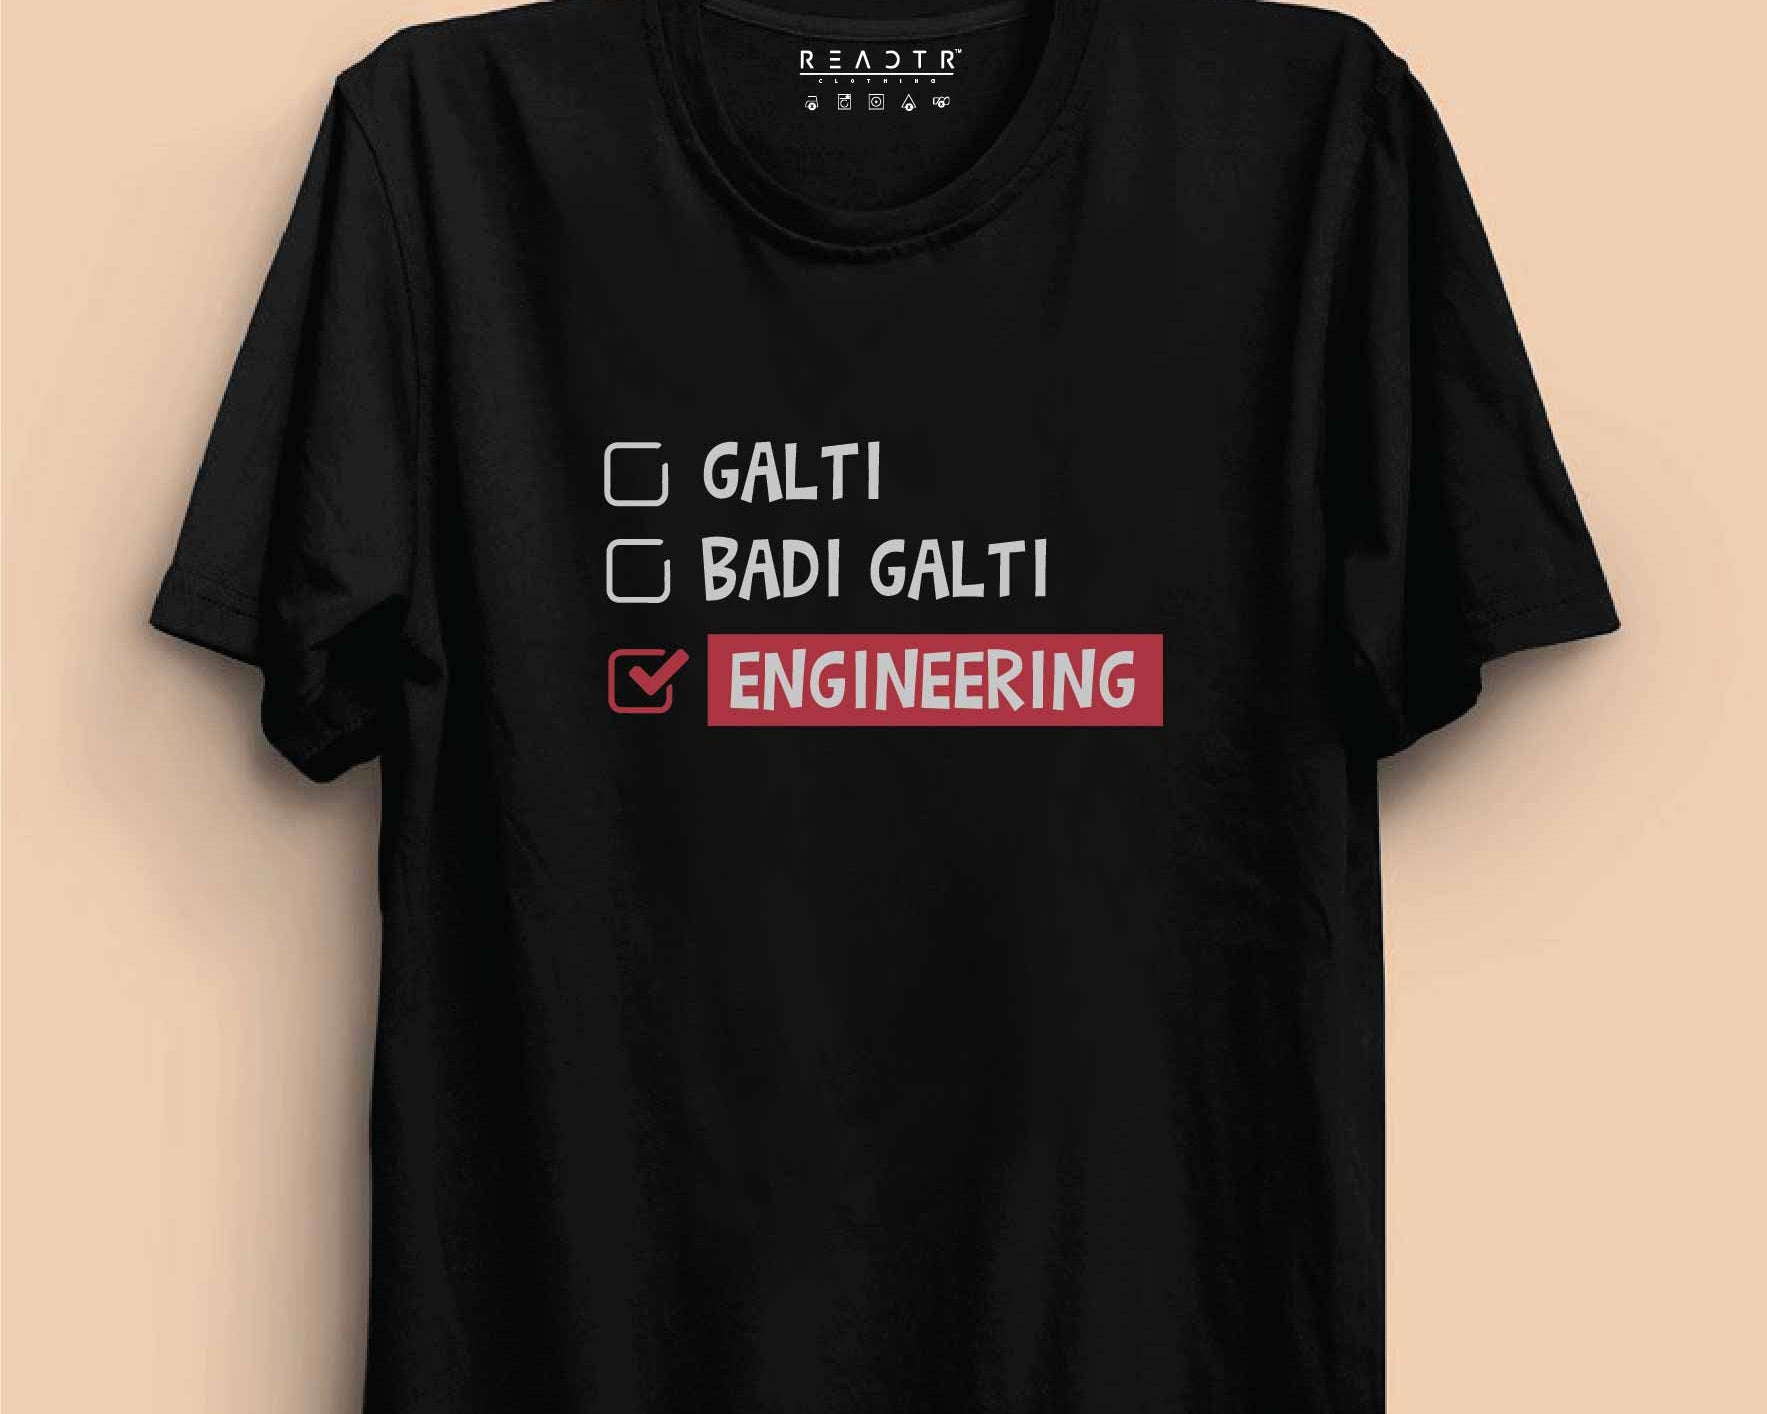 Engineering Galti Reactr Tshirts For Men - Eyewearlabs